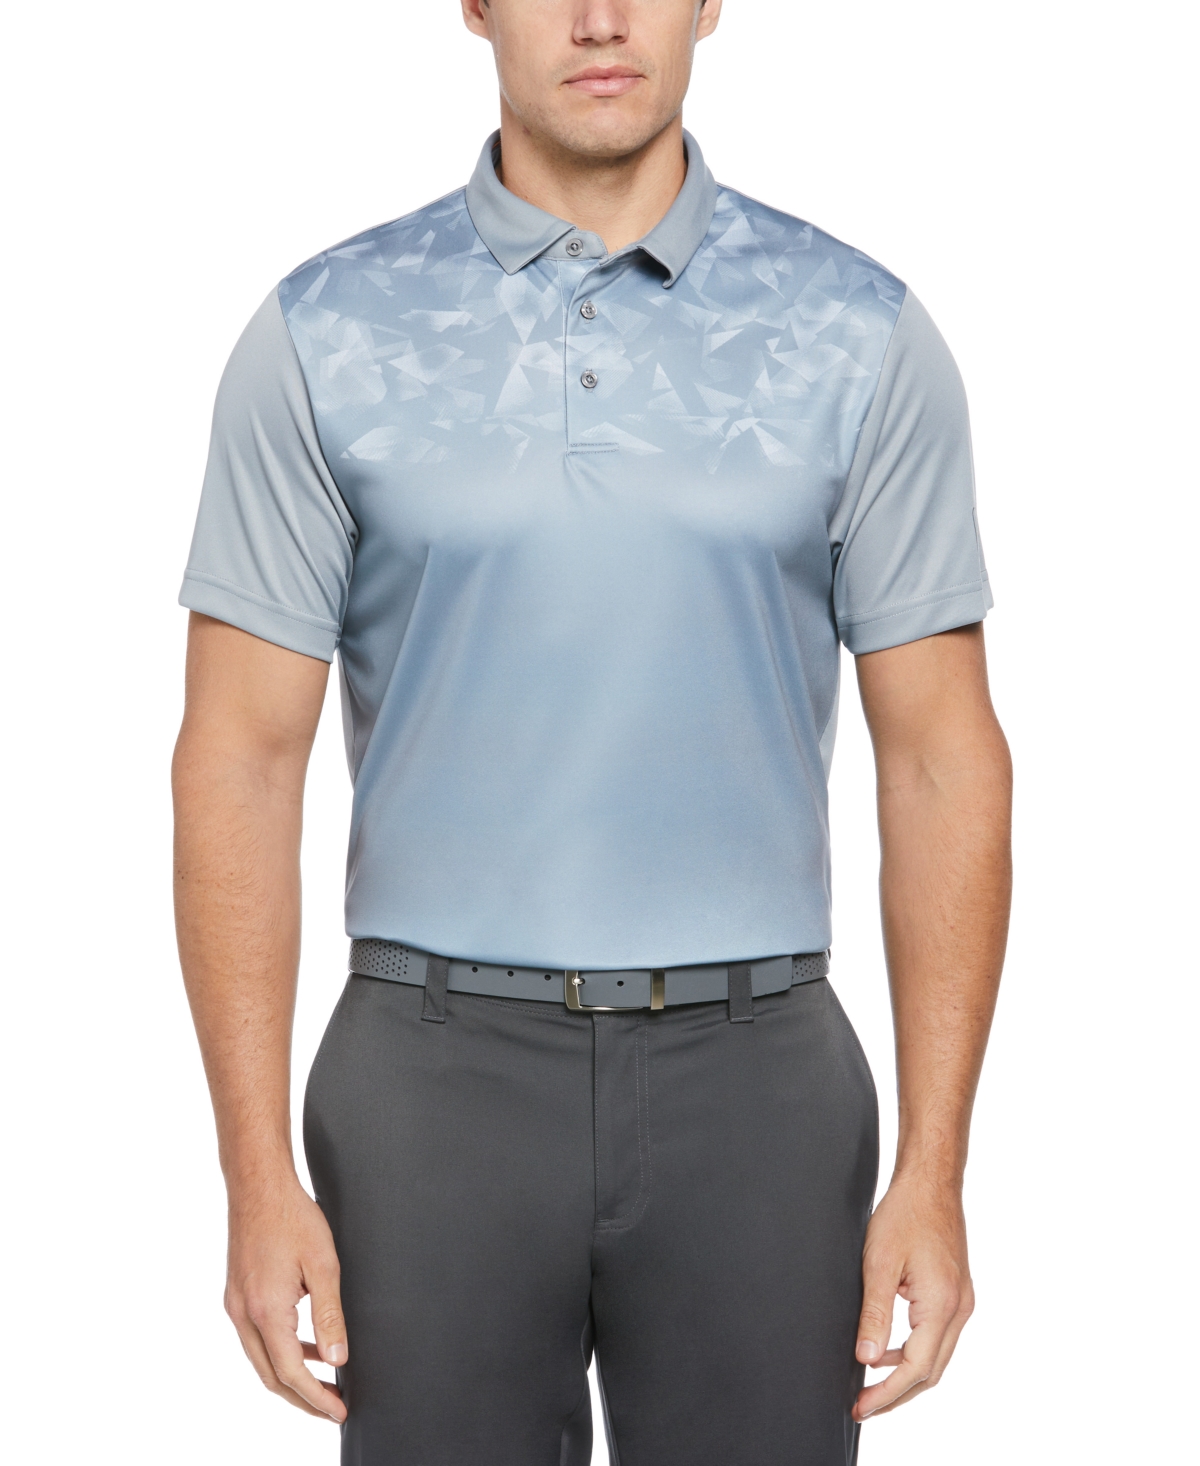 Men's Athletic Fit Geo Print Short Sleeve Golf Polo Shirt - Peacoat